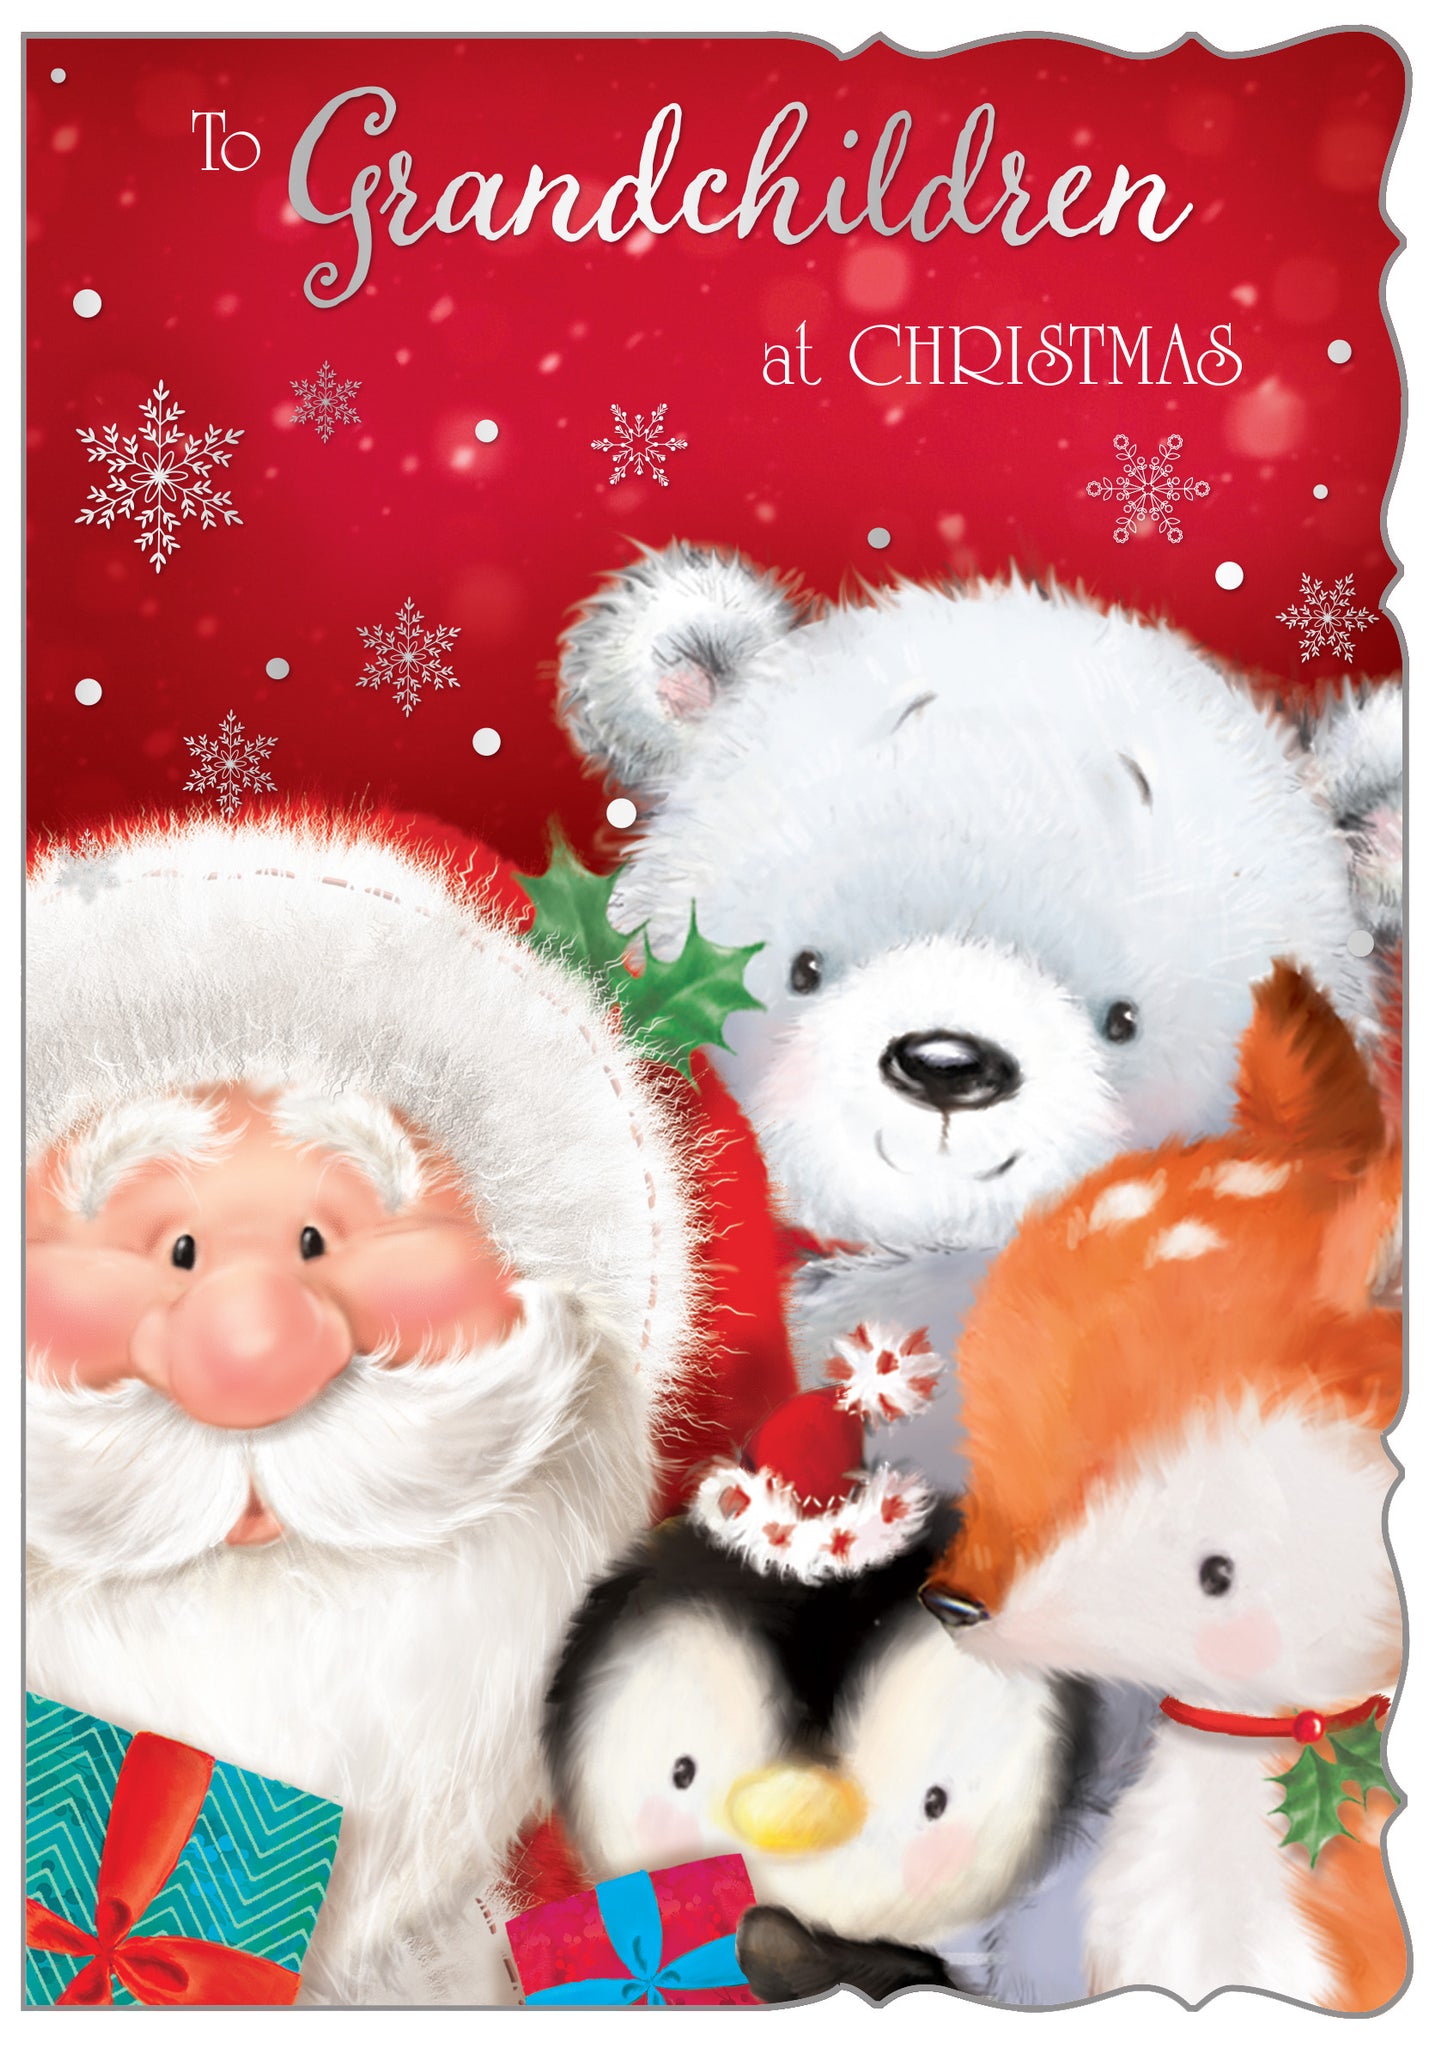 To grandchildren Christmas card - cute Christmas